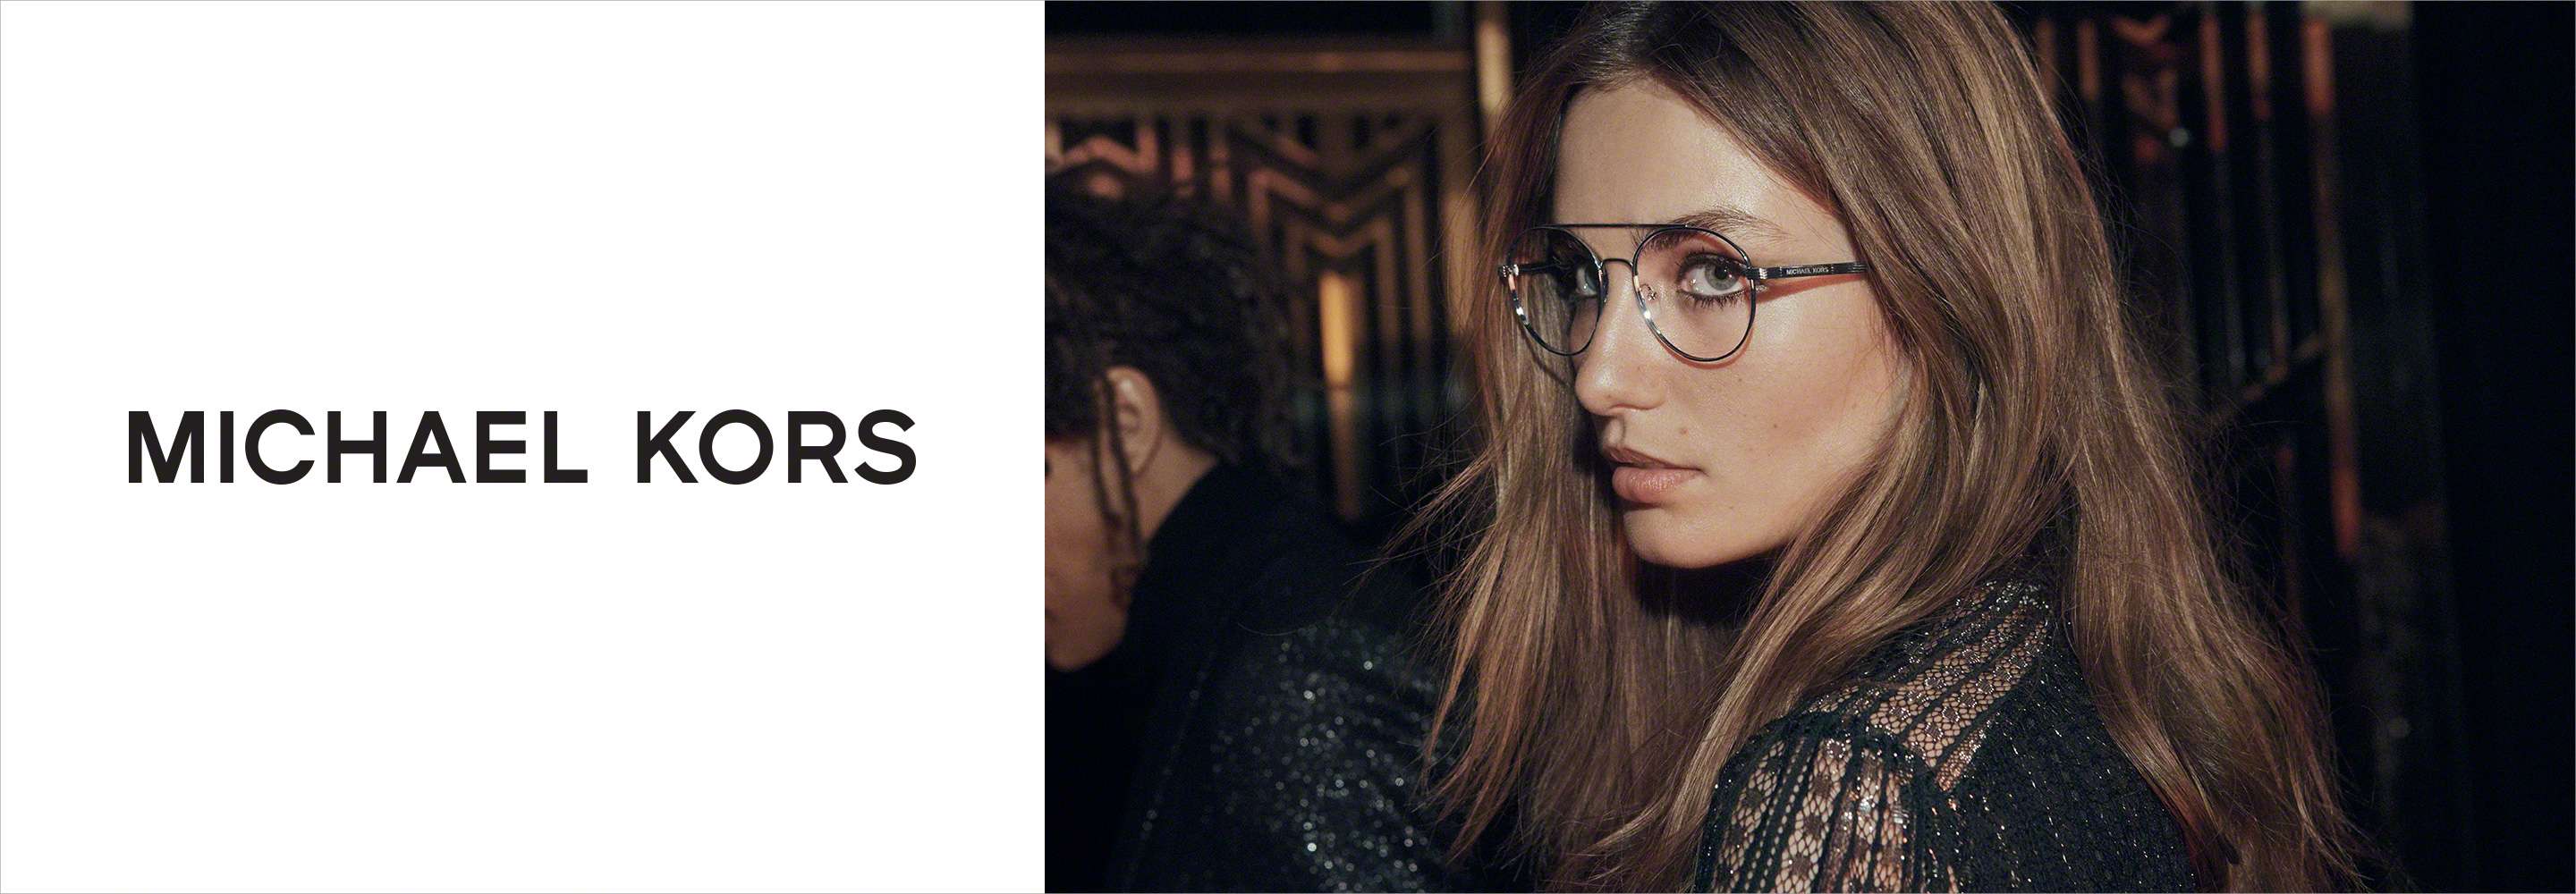 Eyewear: Glasses, Frames, Sunglasses & More at LensCrafters